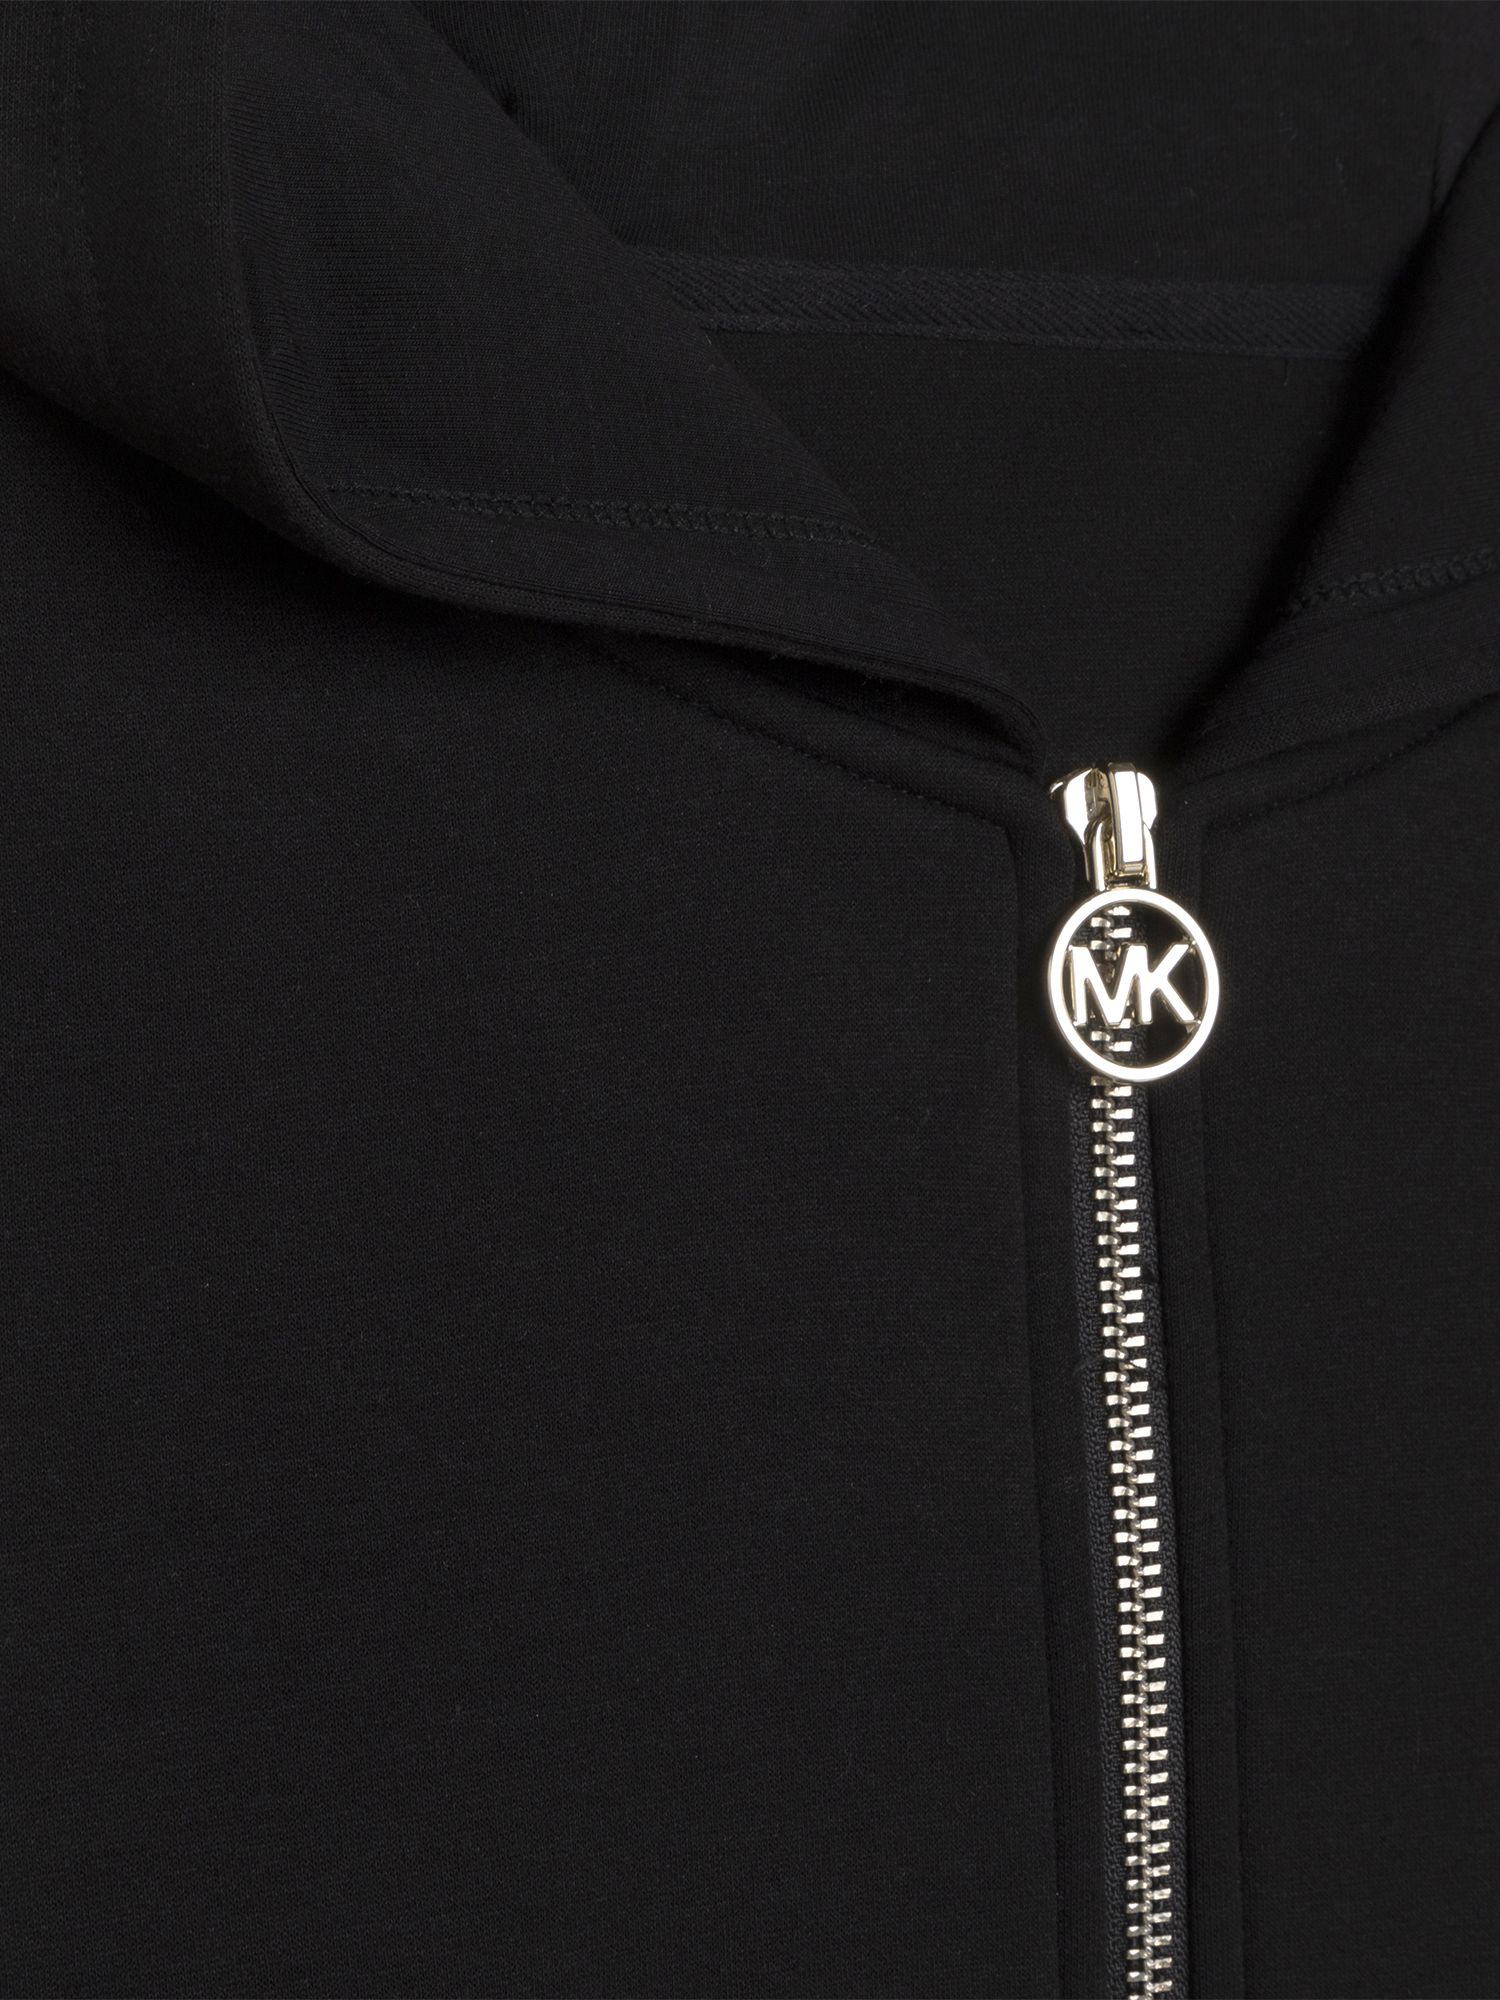 Michael Kors Kids' Zip Up Logo Tape Sleeve Cardigan, Black, 4 years